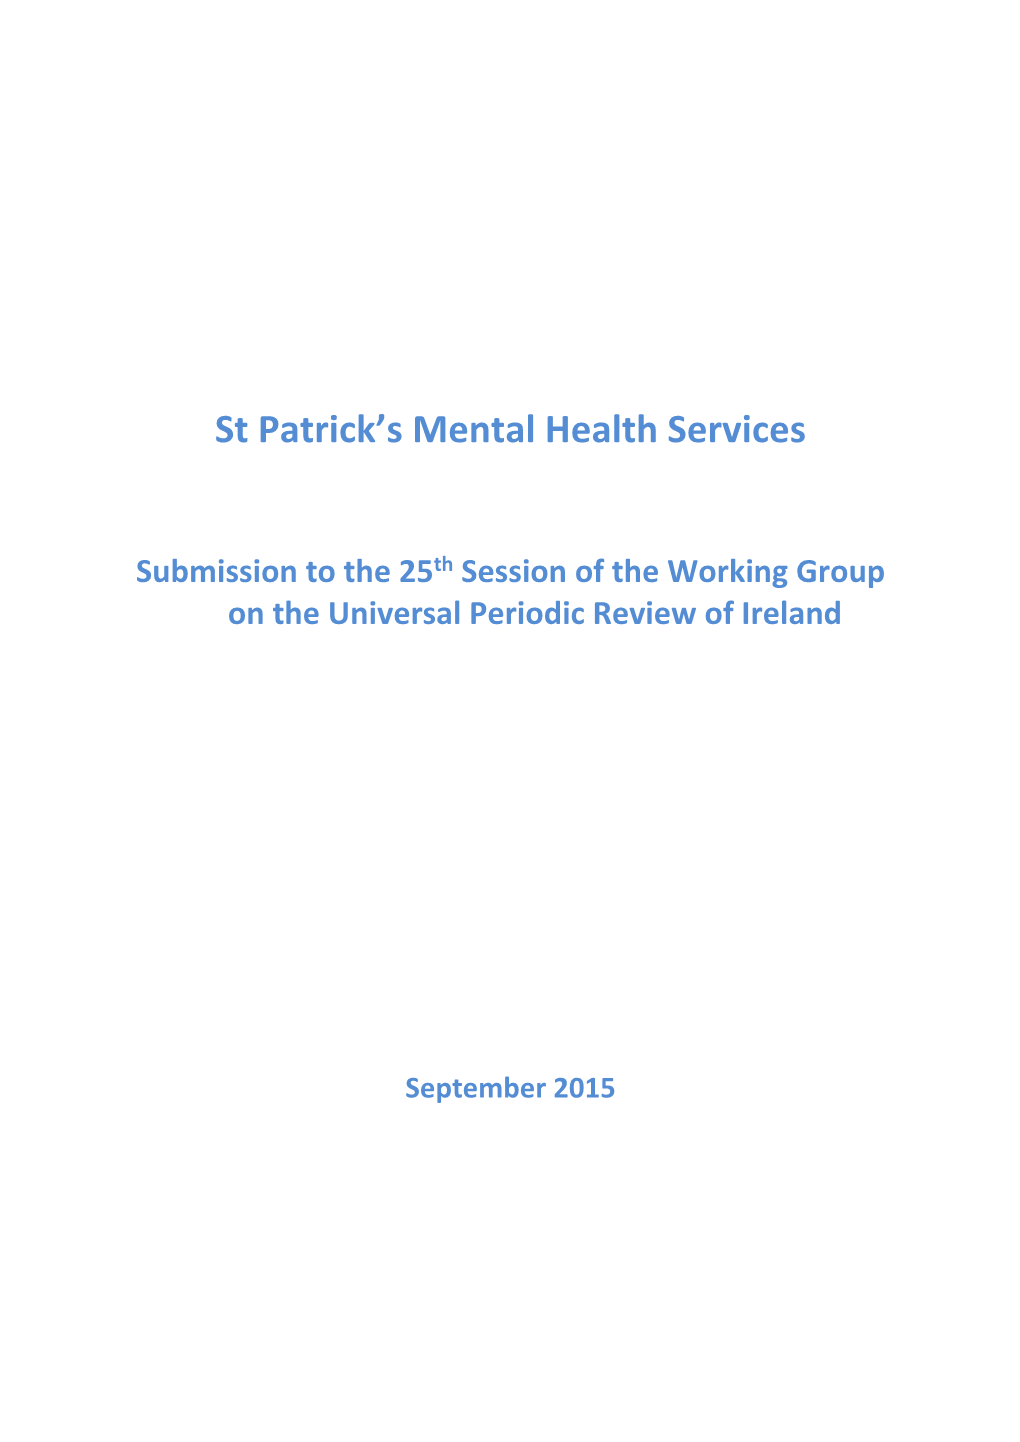 St Patrick's Mental Health Services